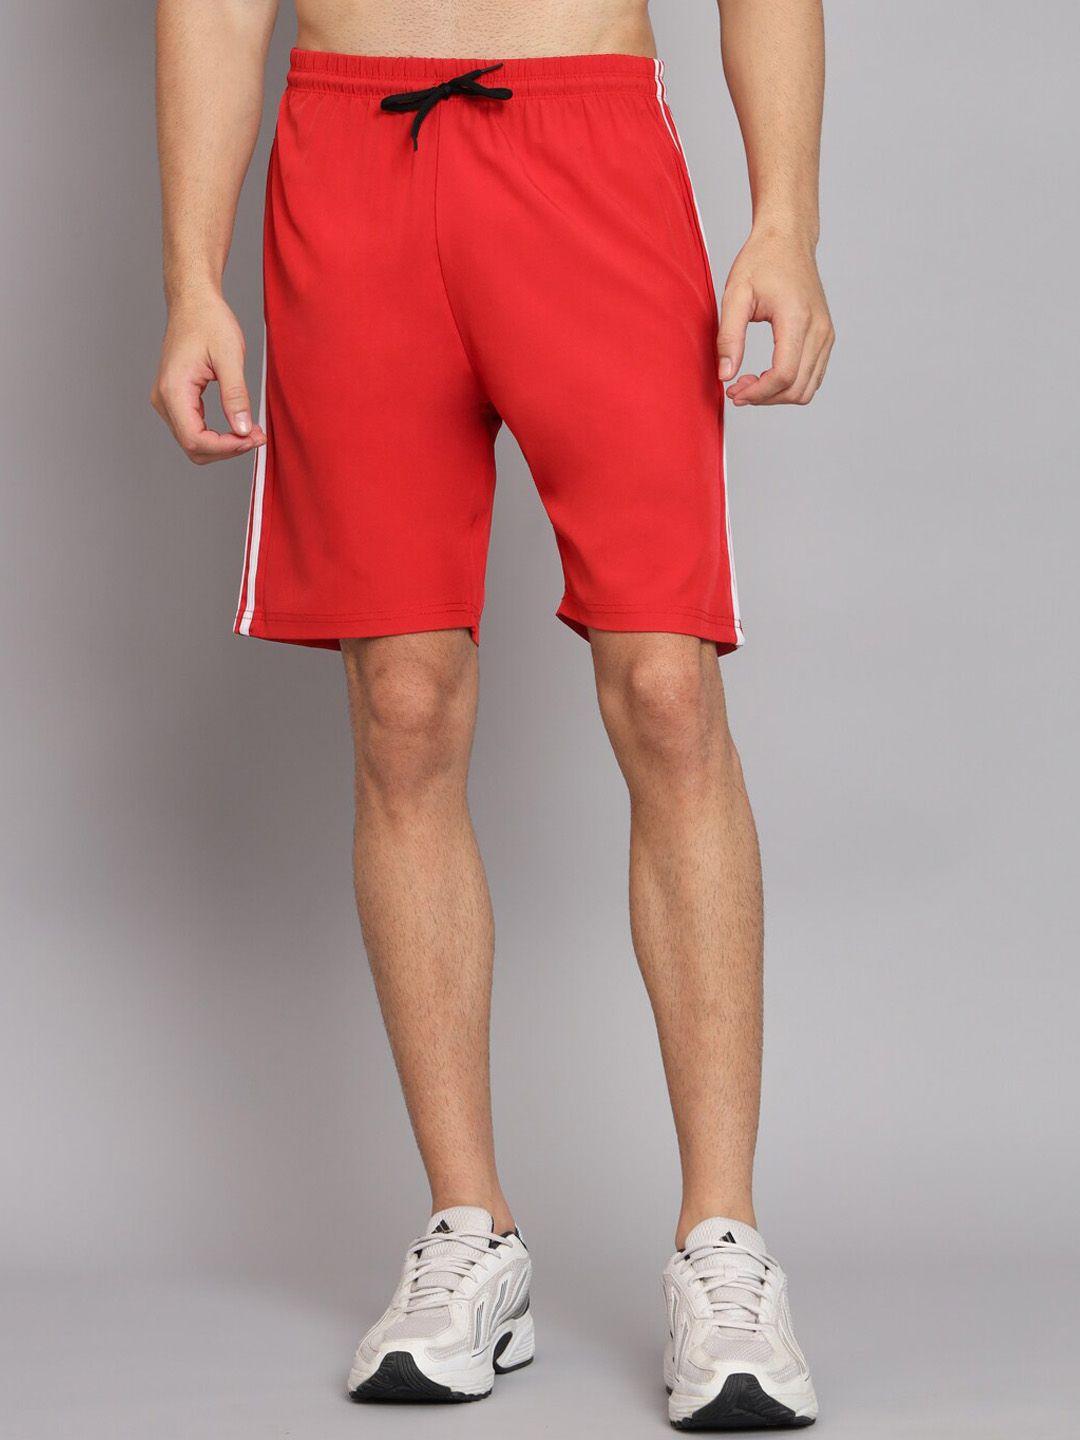 glito men red training or gym sports shorts